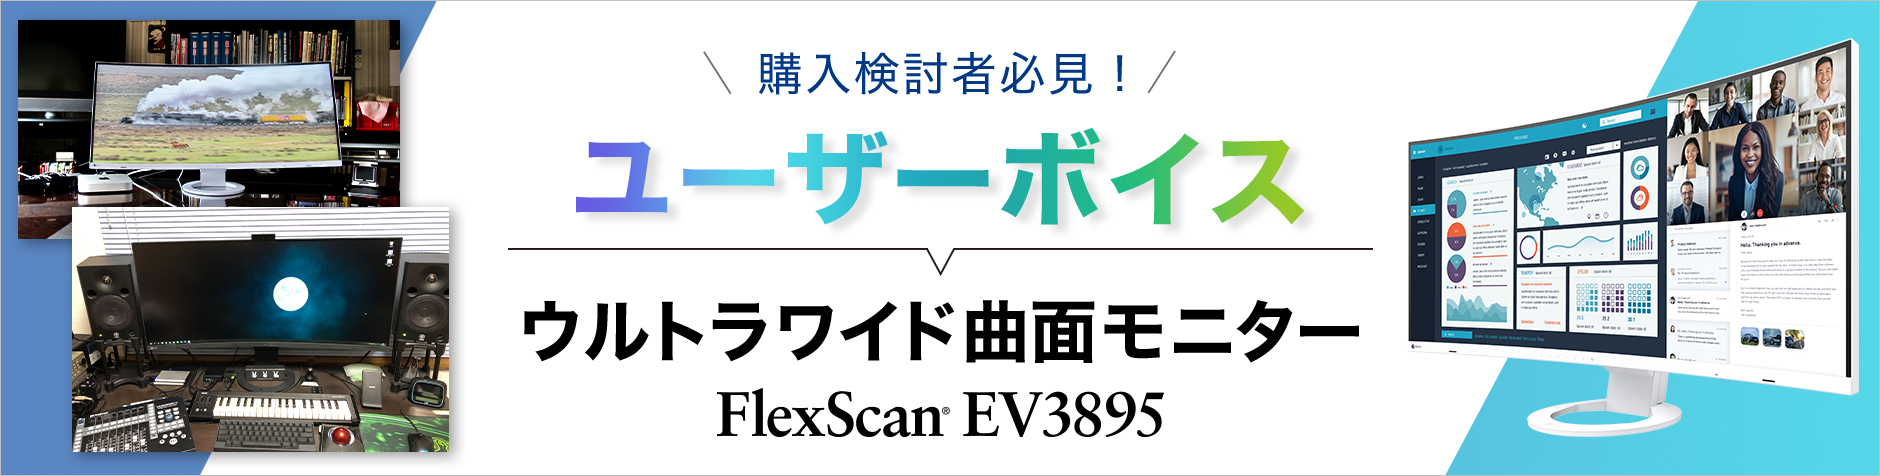 FlexScan EV3895 ユーザーボイス